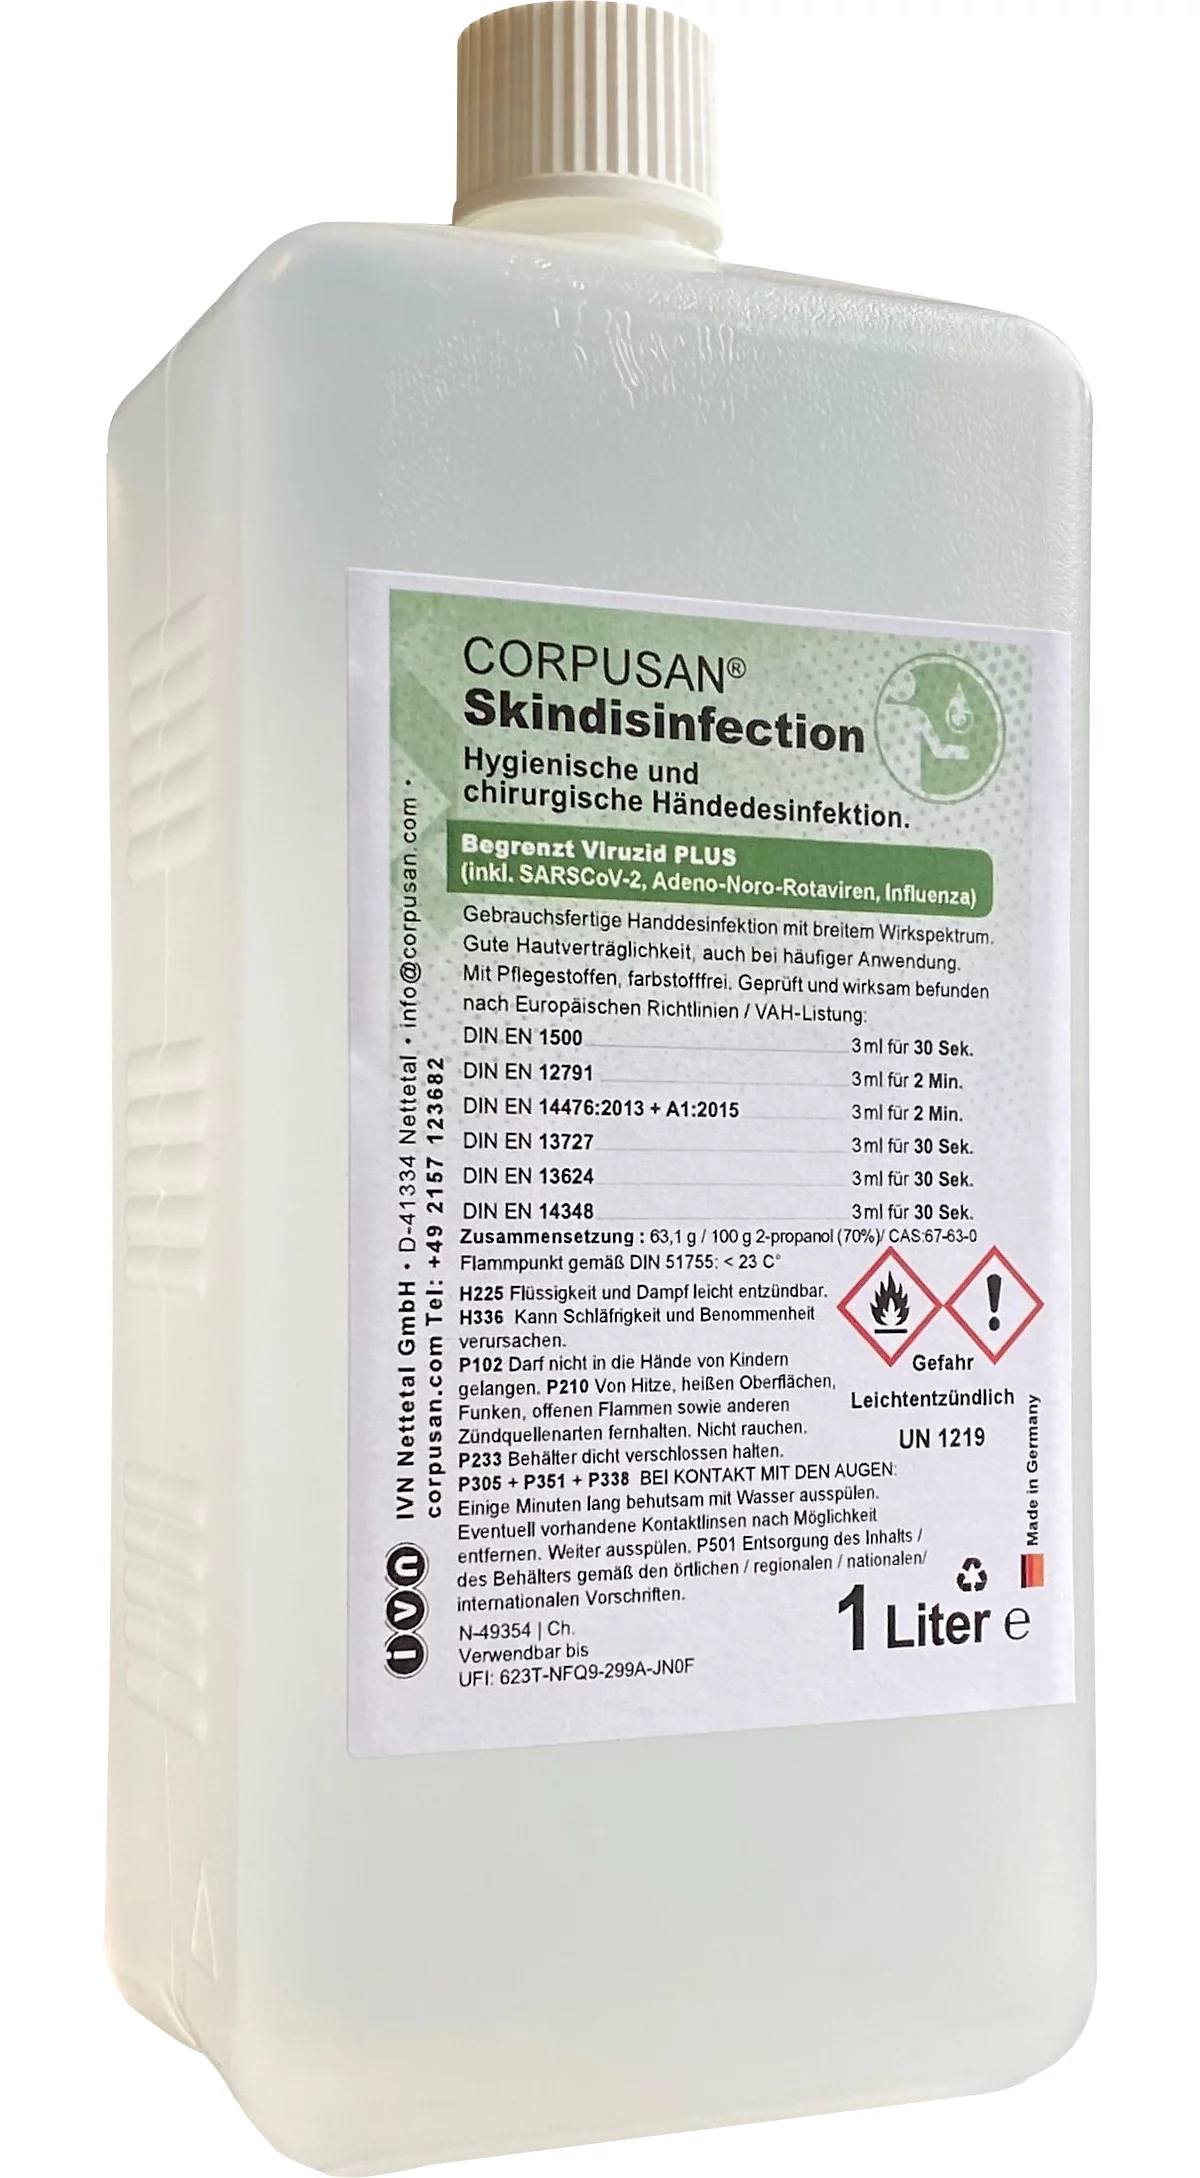 Desinfectante cutáneo CORPUSAN® Skindisinfection, bactericida, levurocida, virucida limitada, incoloro, 10 x 1 litro